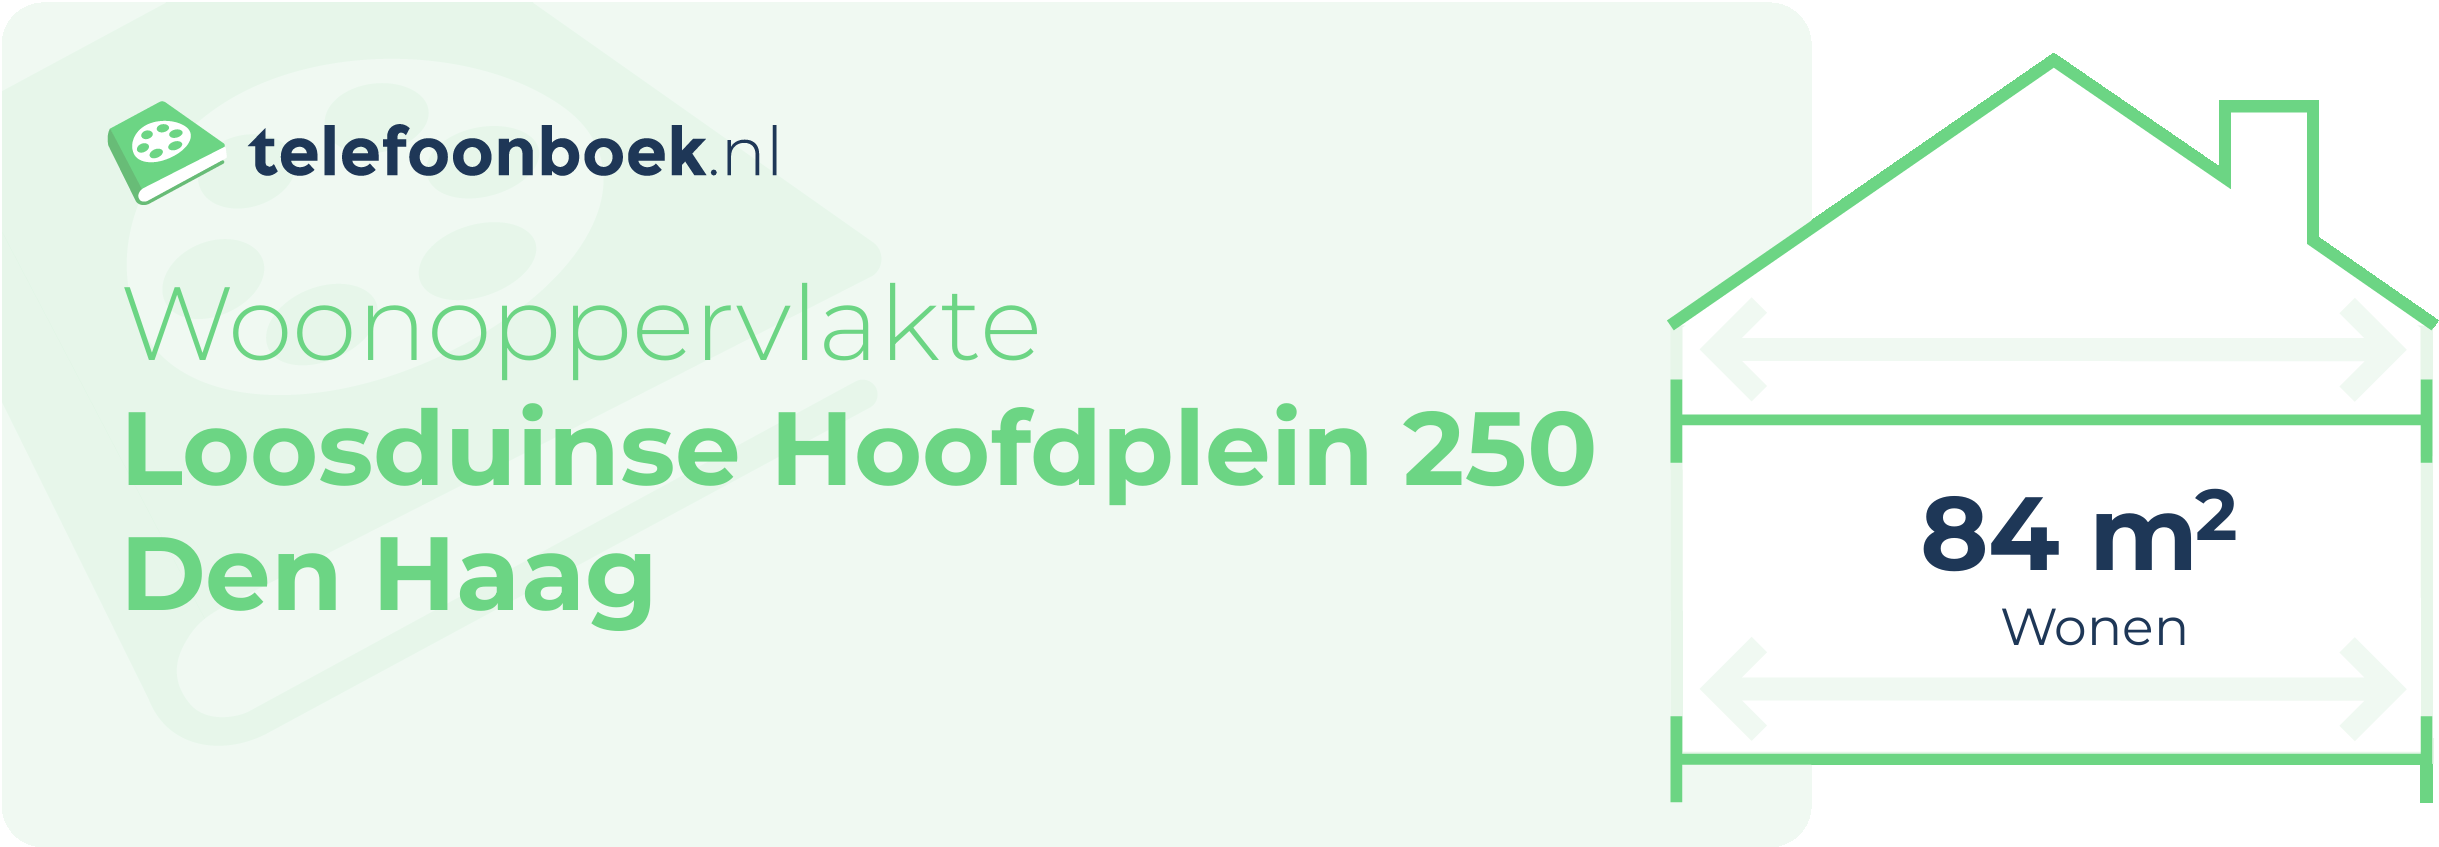 Woonoppervlakte Loosduinse Hoofdplein 250 Den Haag